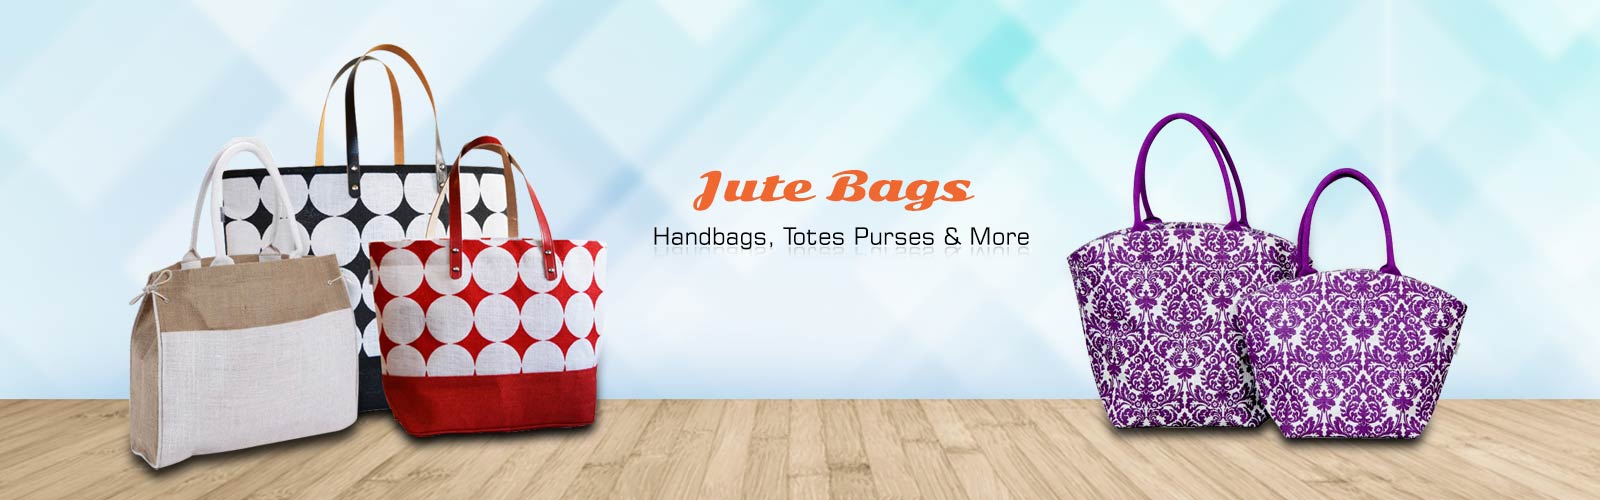 Wholesale Jute Bag Supplier in London